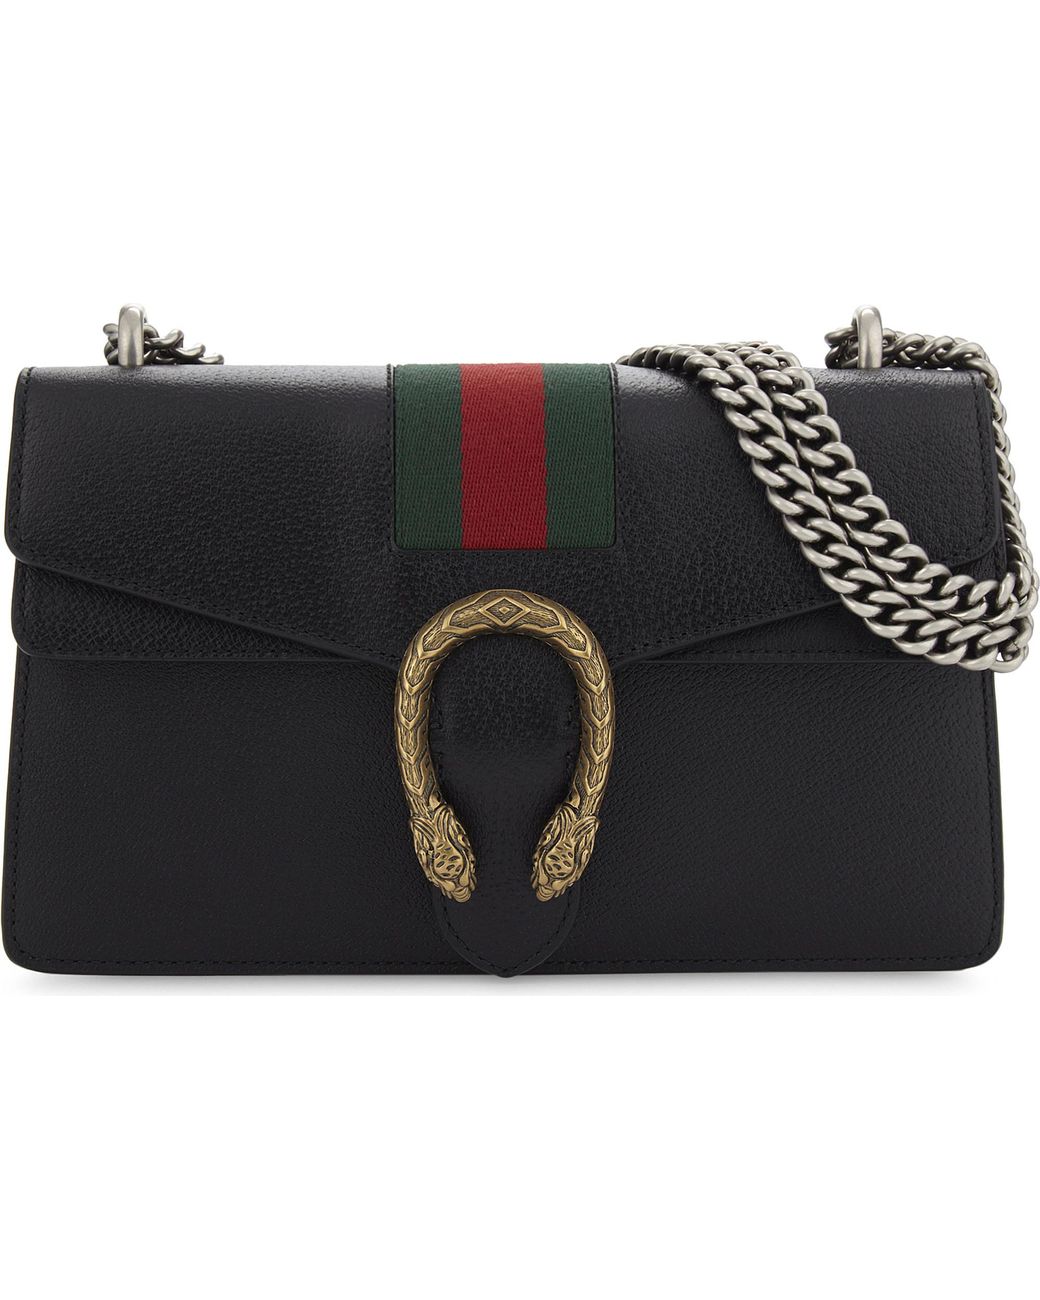 Gucci Dionysus Web Stripe Small Leather Shoulder Bag in Black | Lyst